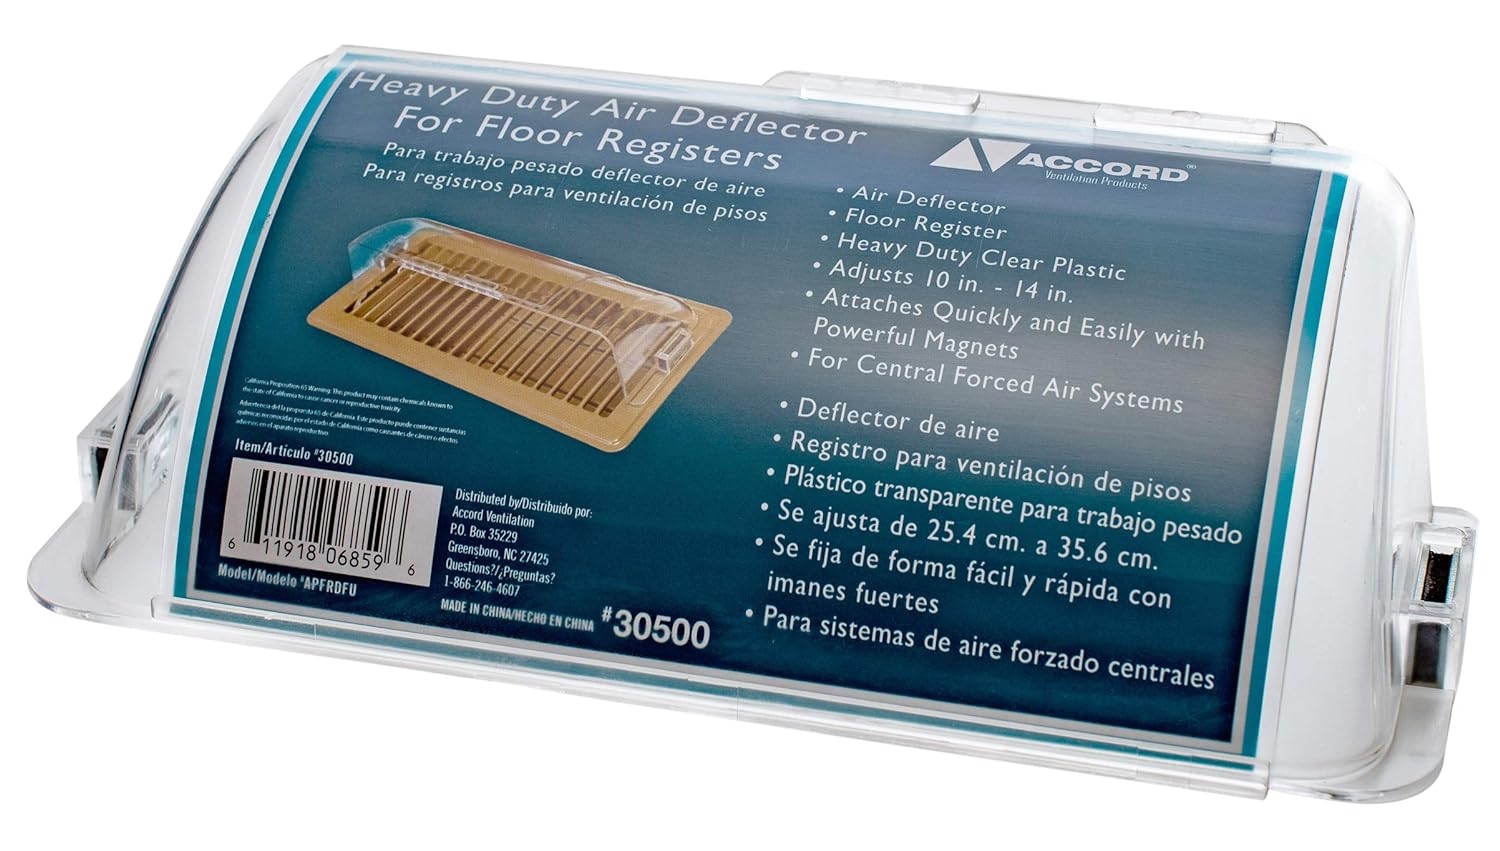 Accord APFRDFU Heavy Duty Magnetic Adjustable Air Deflector for Floor Registers